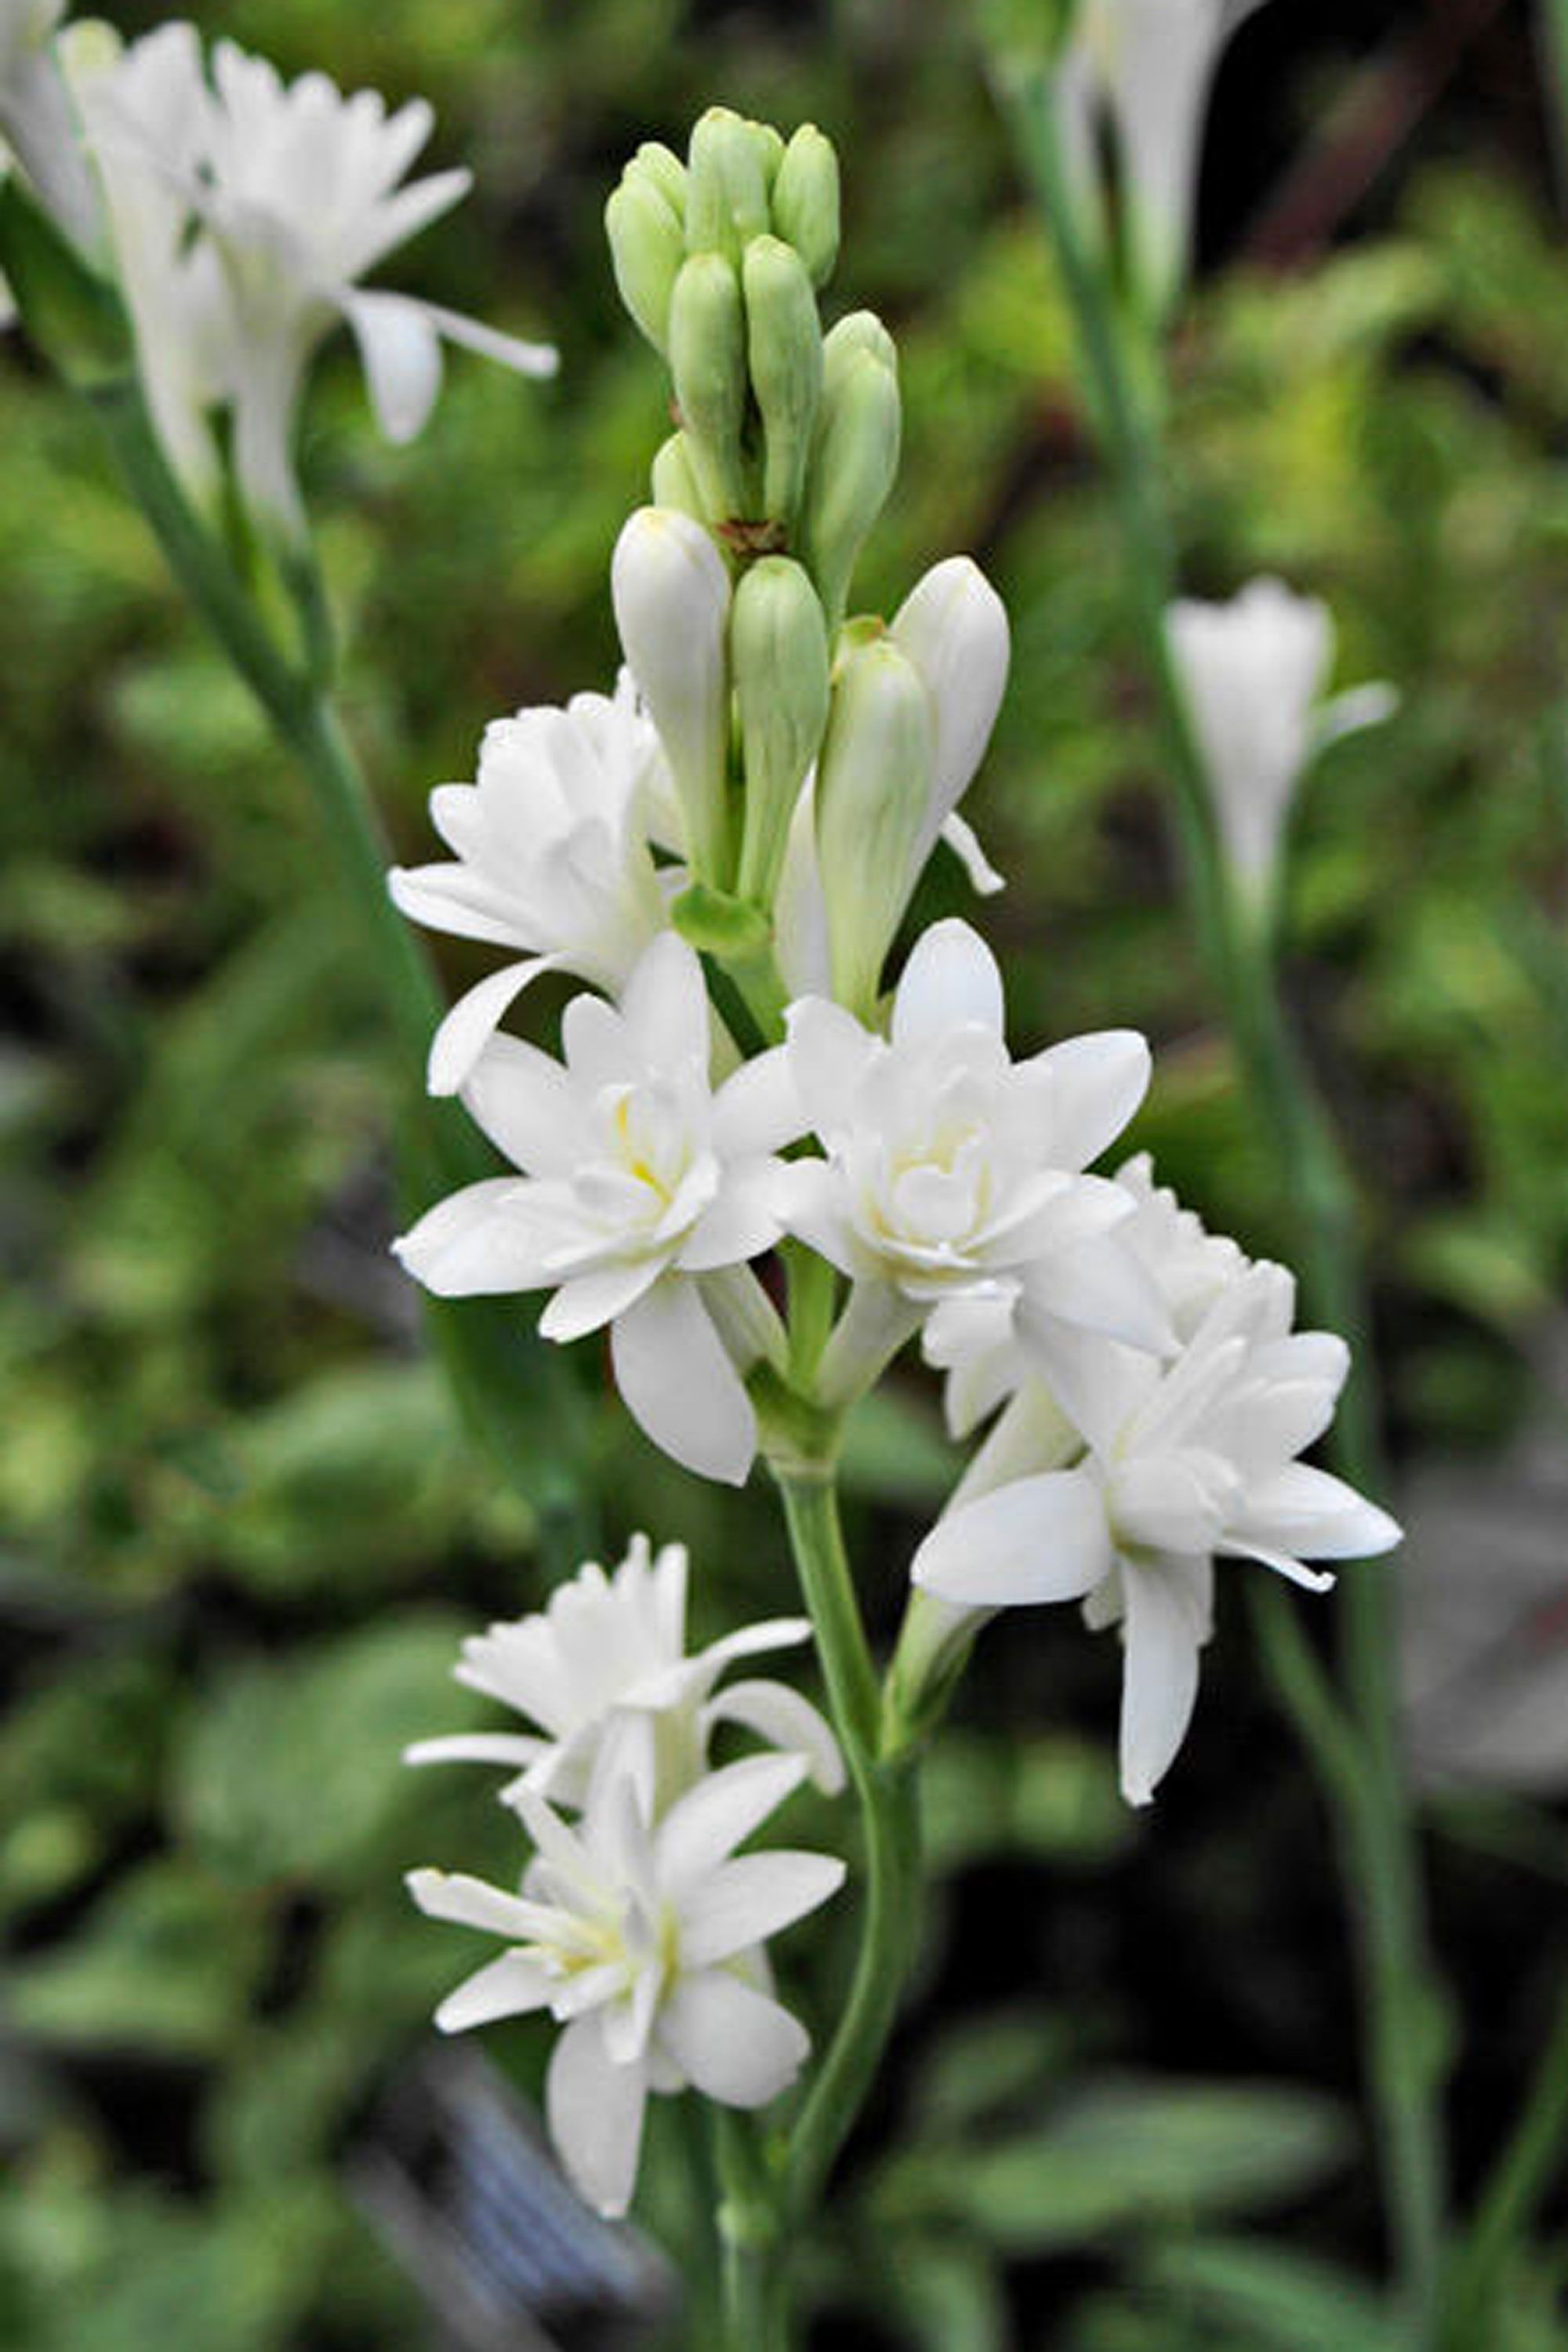 white flowering house plants